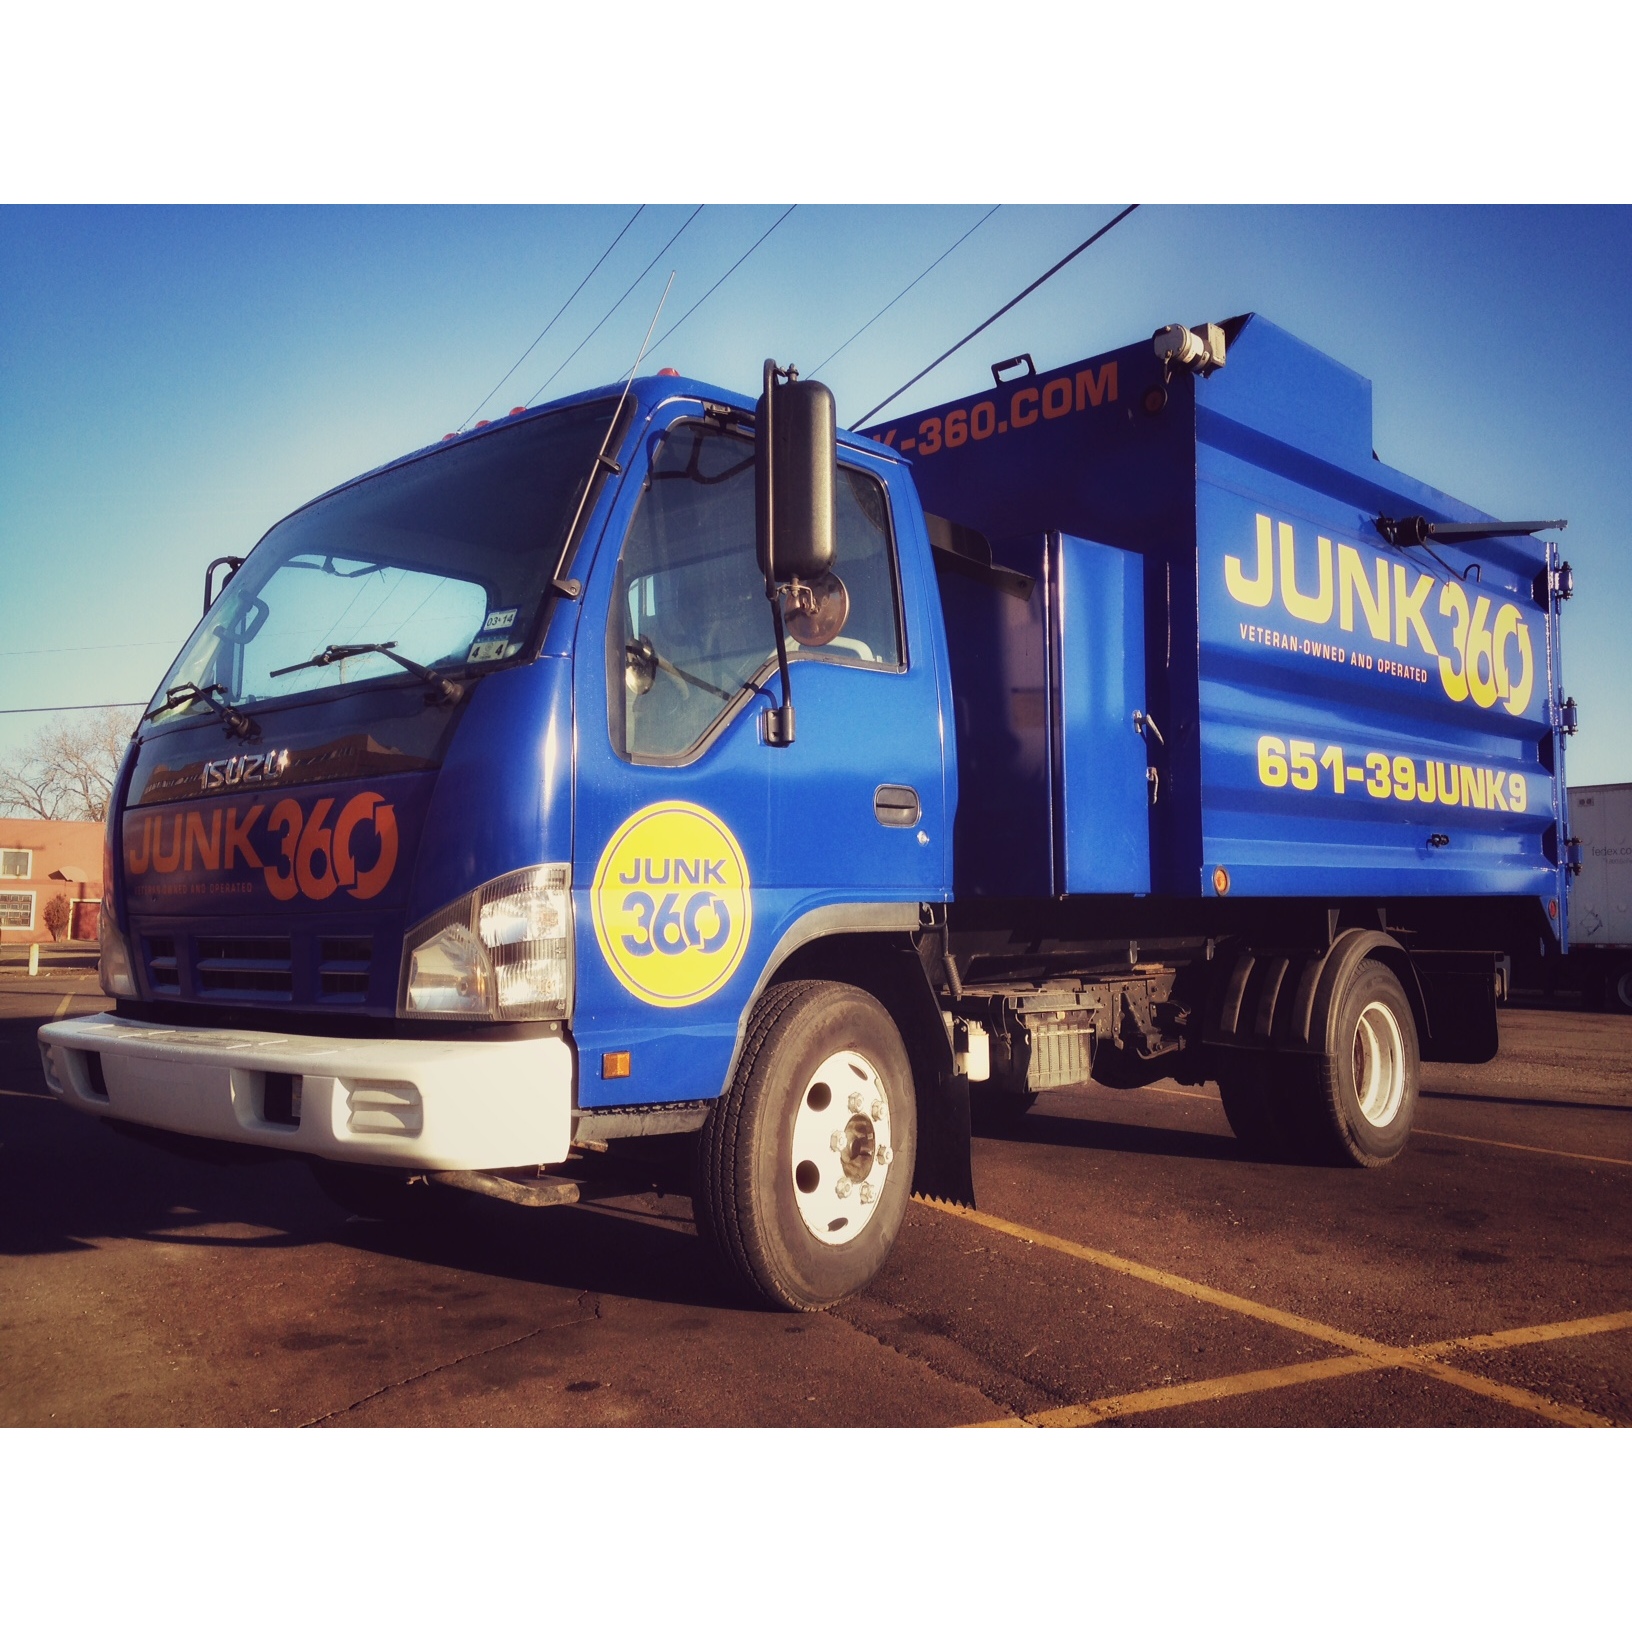 Junk360 Logo